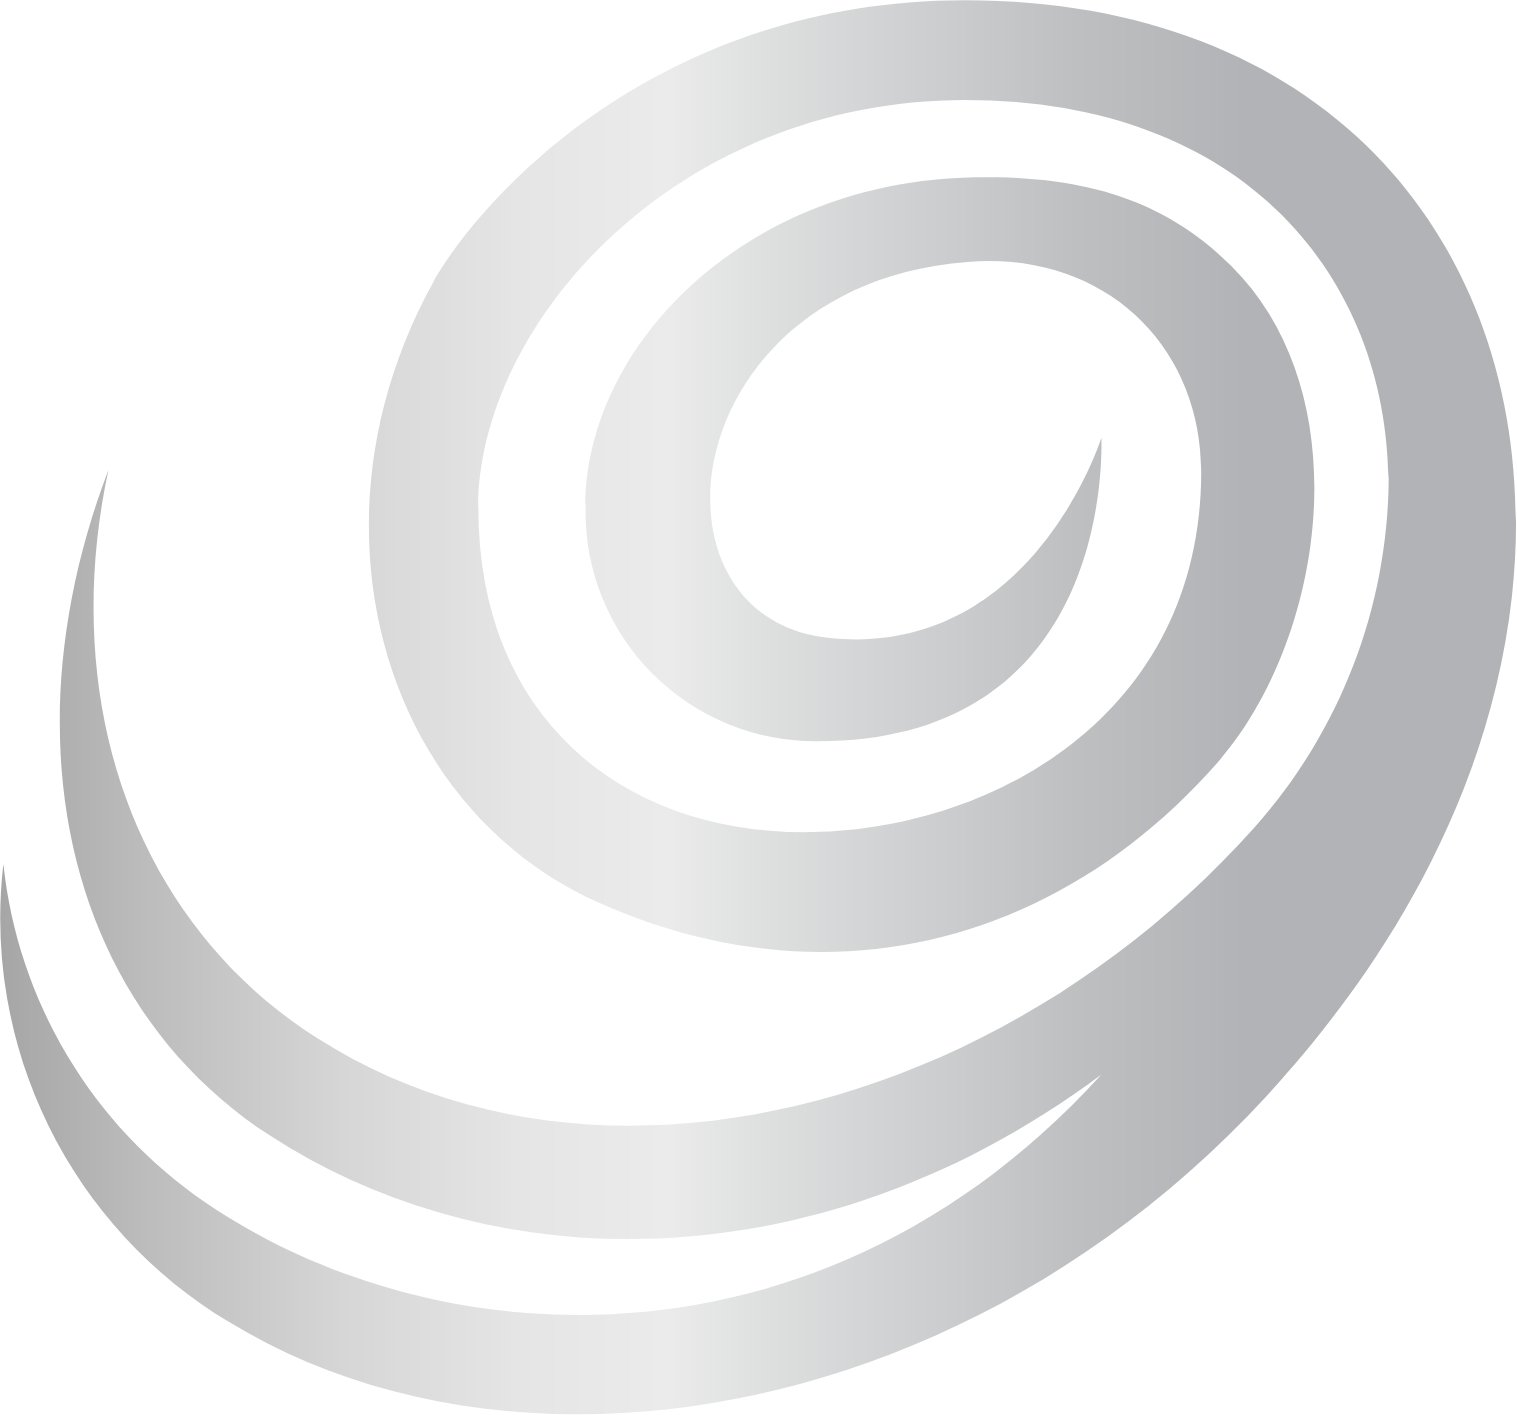 Zain (Mobile Telecommunications Company) logo (PNG transparent)